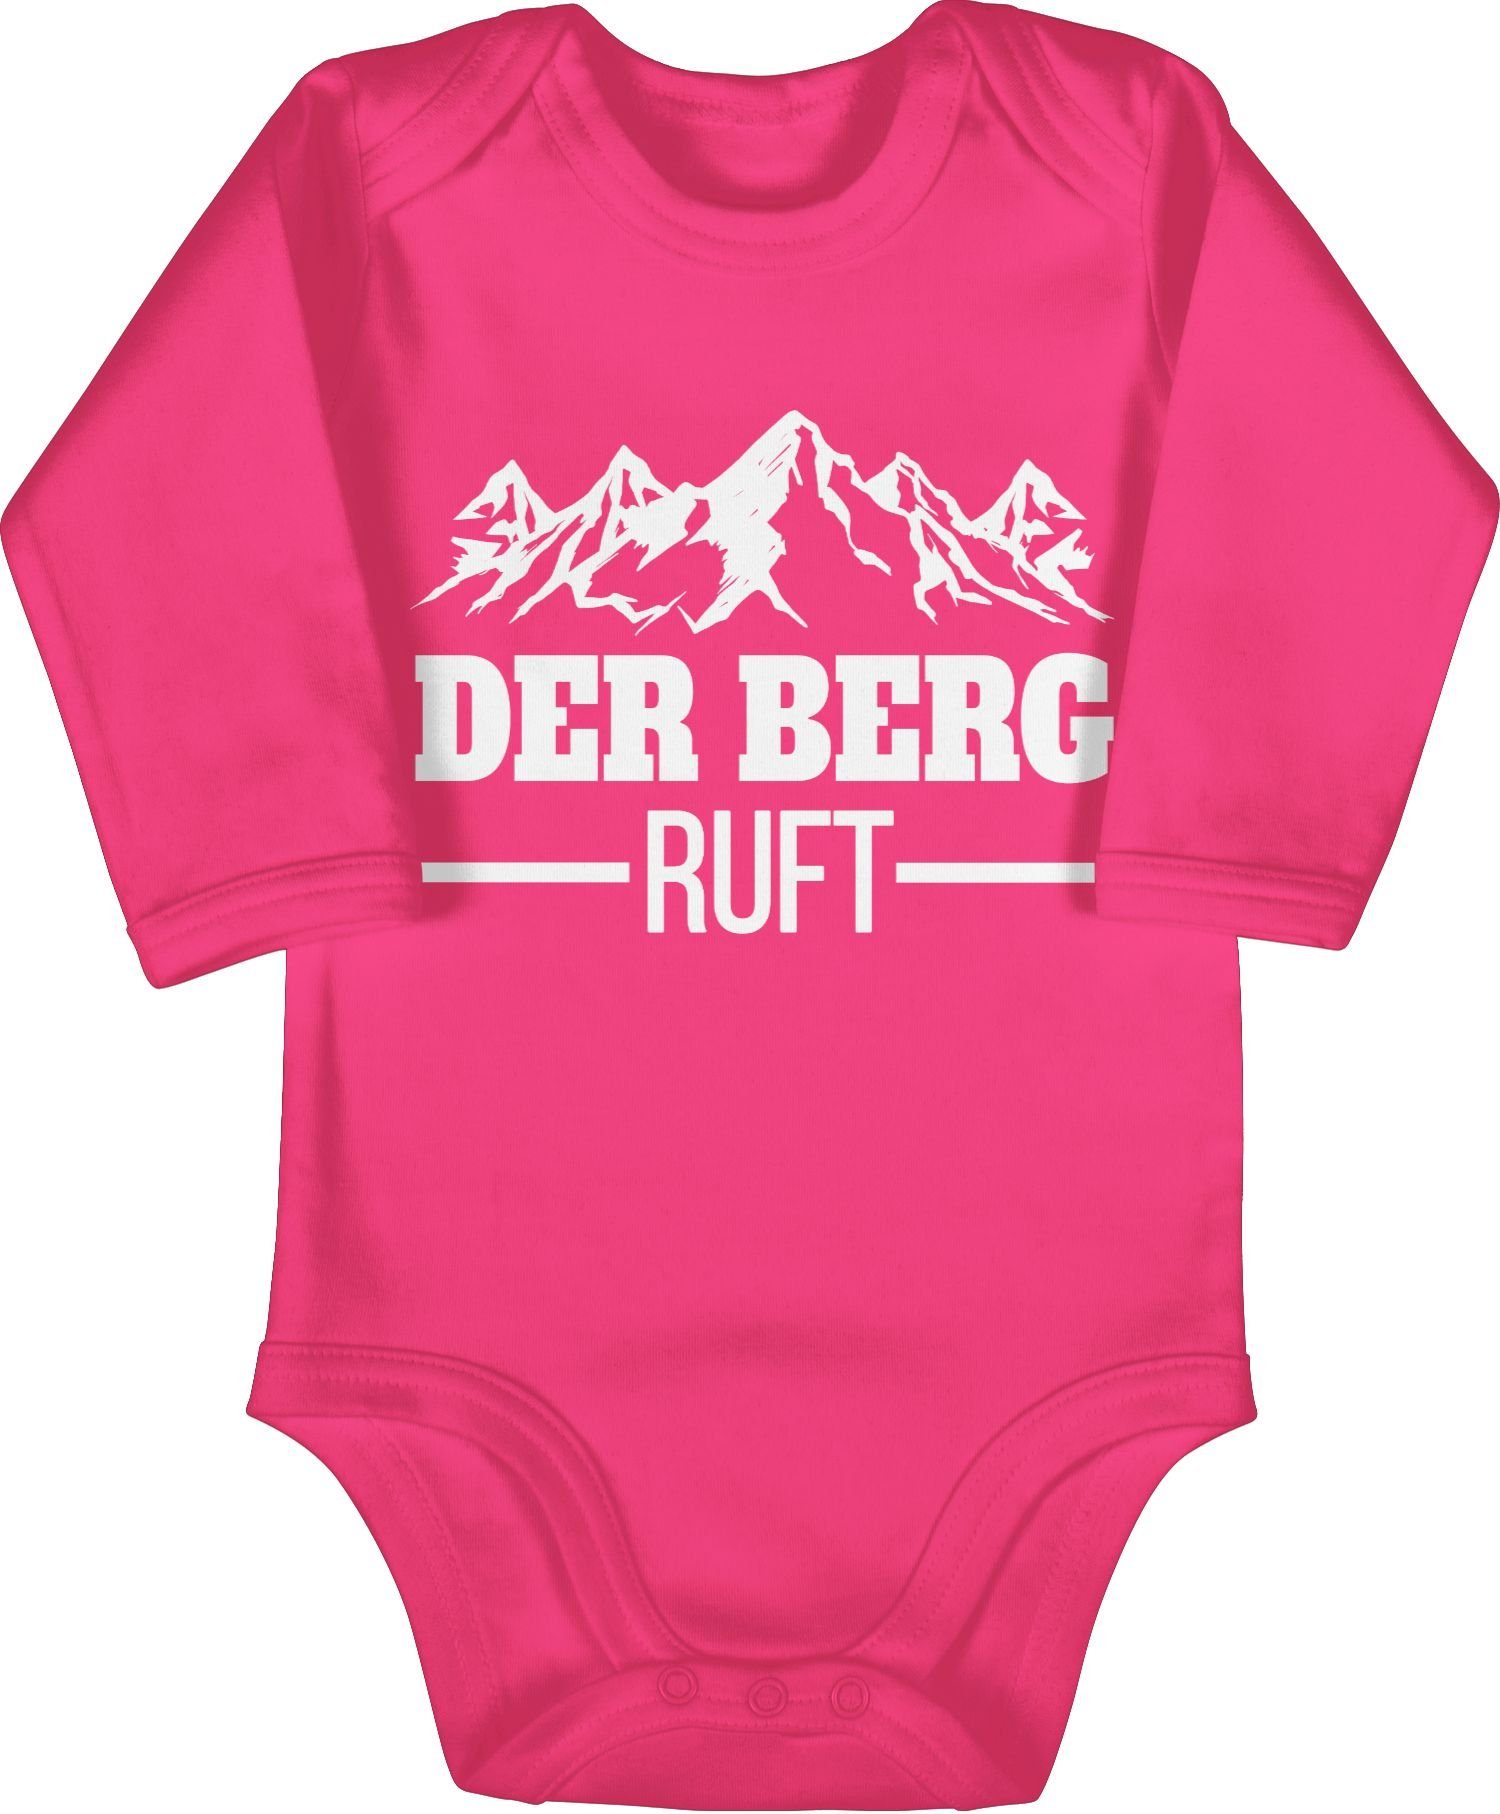 Shirtracer Shirtbody Der Berg ruft Sport & Bewegung Baby 2 Fuchsia